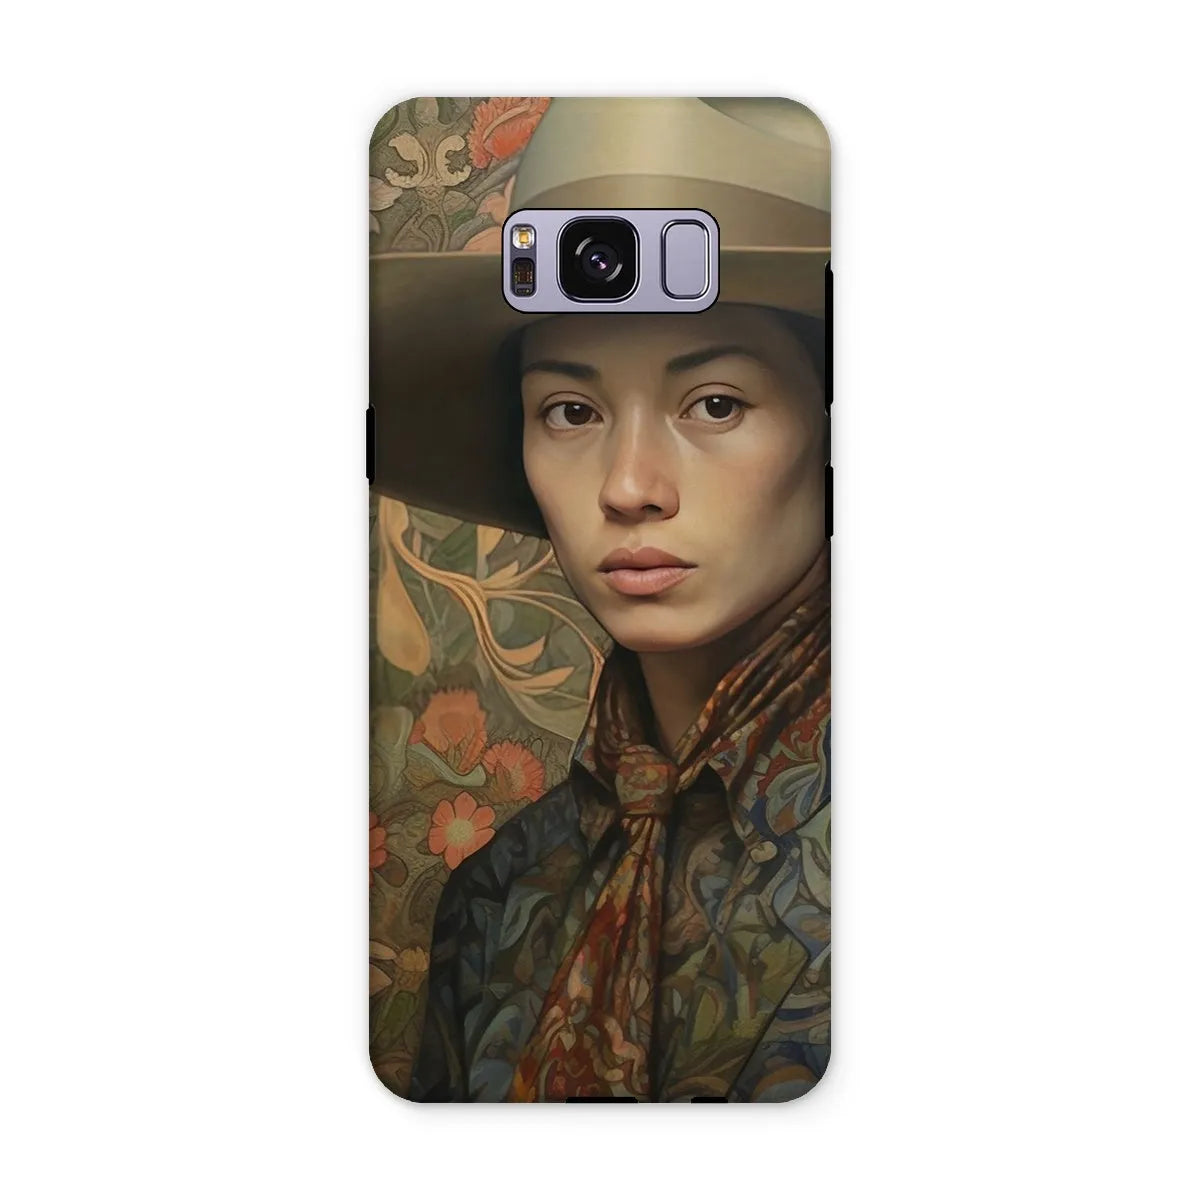 Fulin The Gay Cowboy - Dandy Gay Men Art Phone Case - Samsung Galaxy S8 Plus / Matte - Mobile Phone Cases - Aesthetic